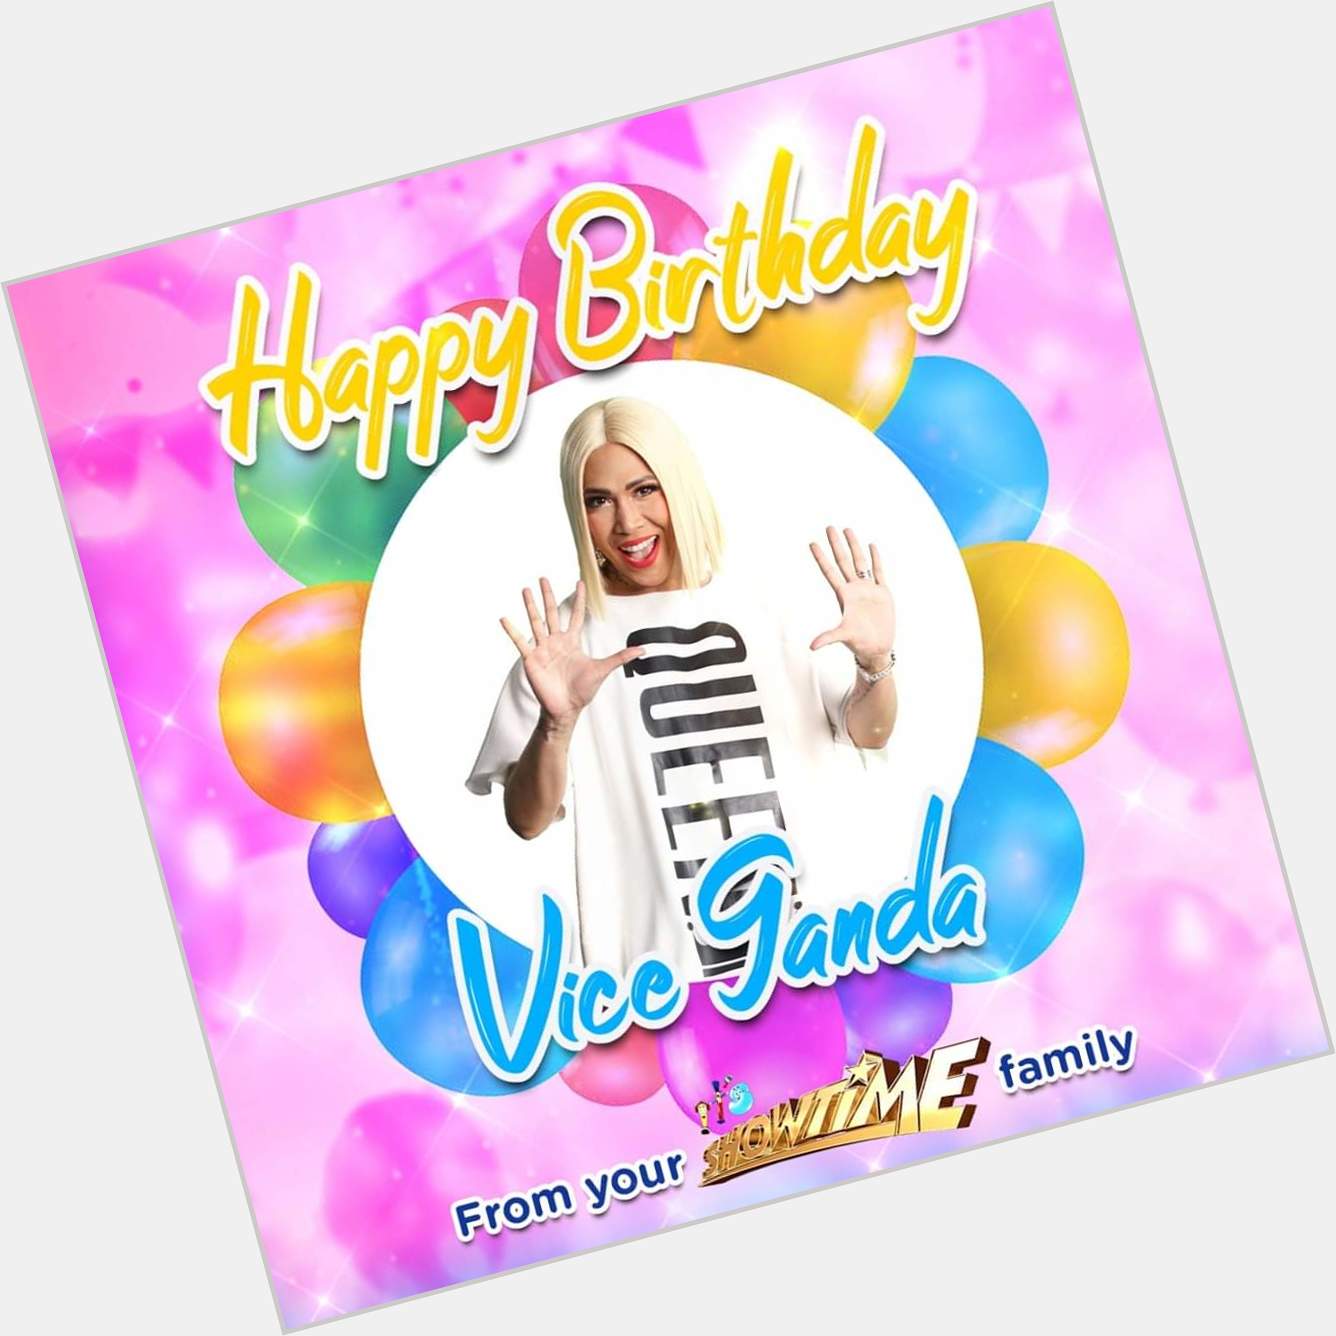 Happy birthday meme Vice Ganda!   